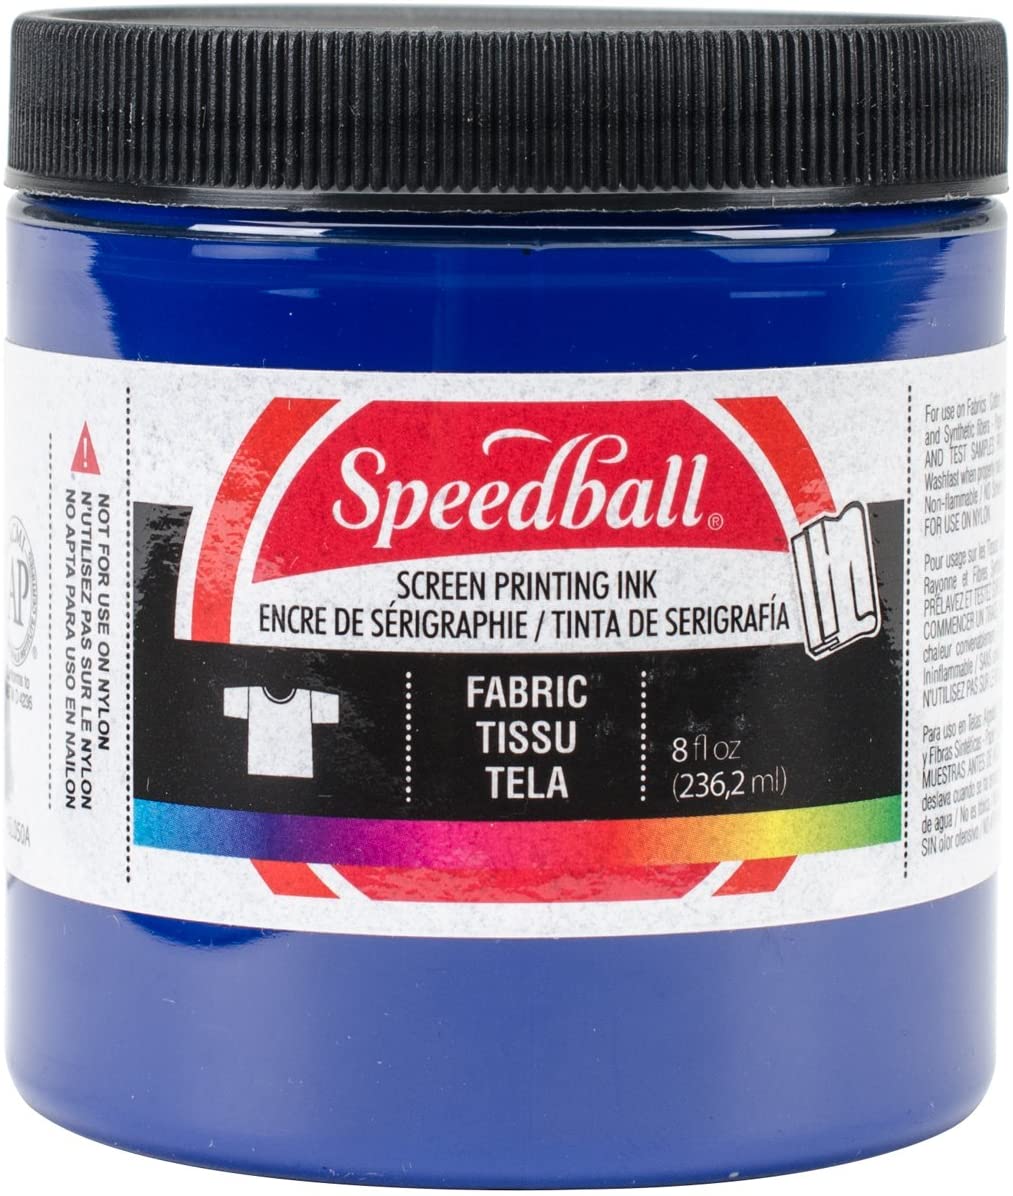 Speedball Fabric Screen Printing Ink 32 oz Jar - Fluorescent Blue